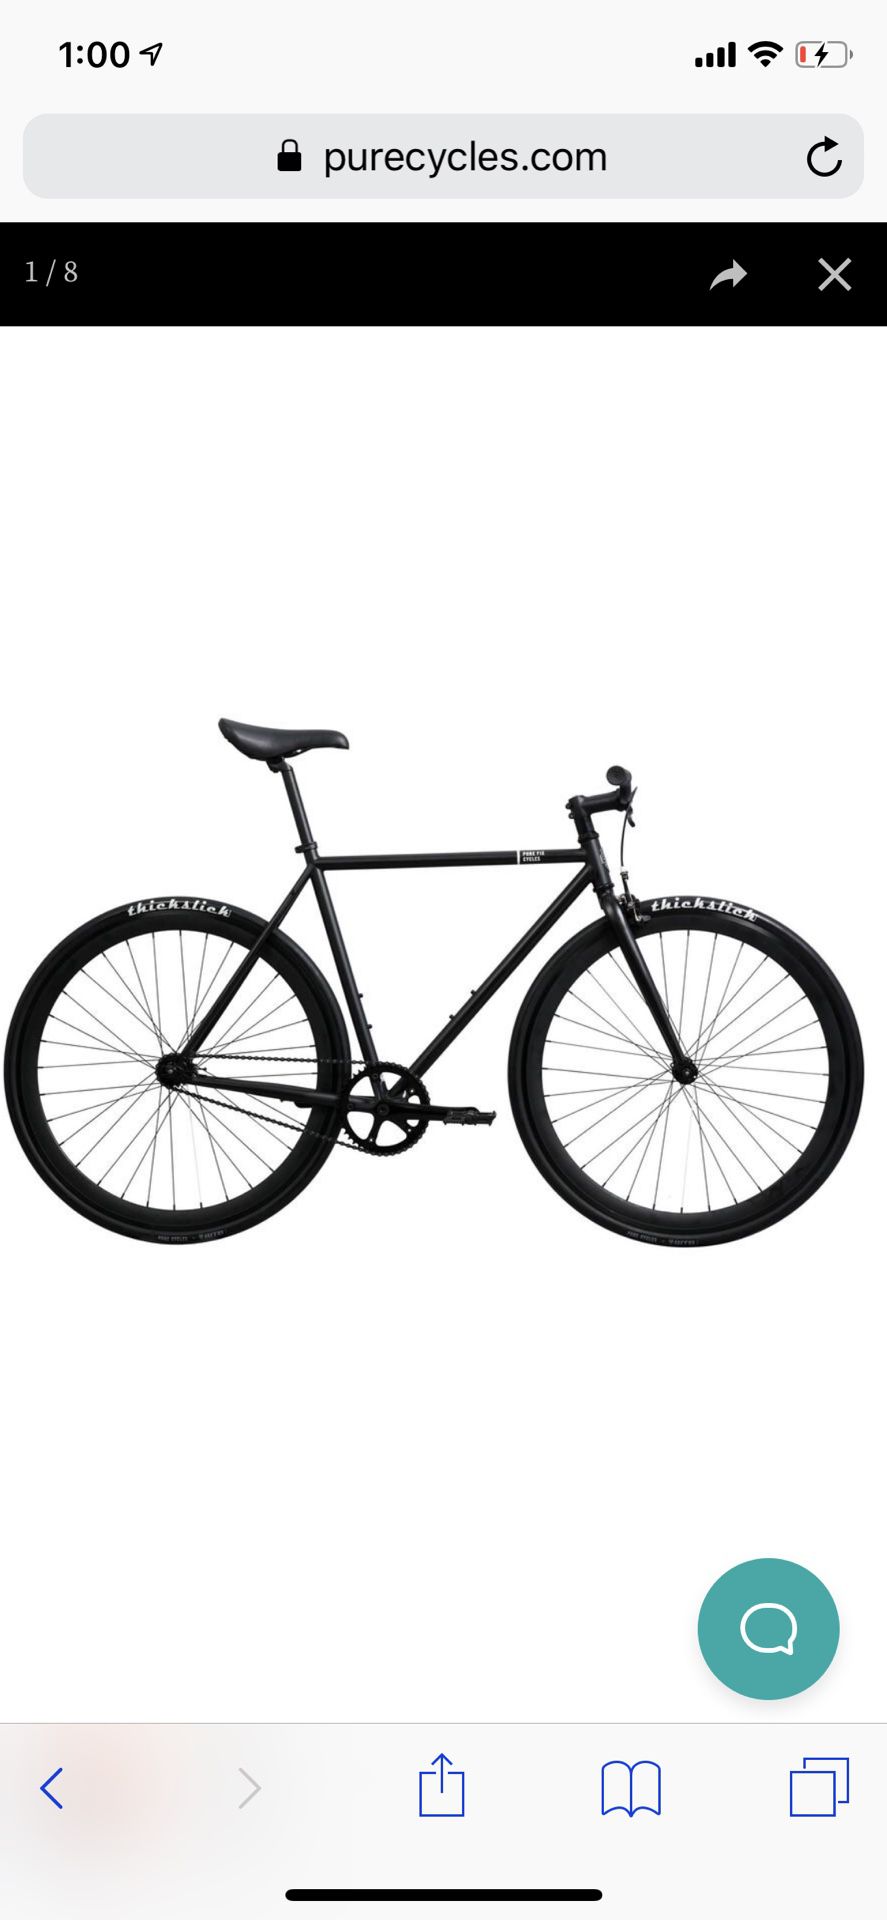 Pure cycles single speed bike